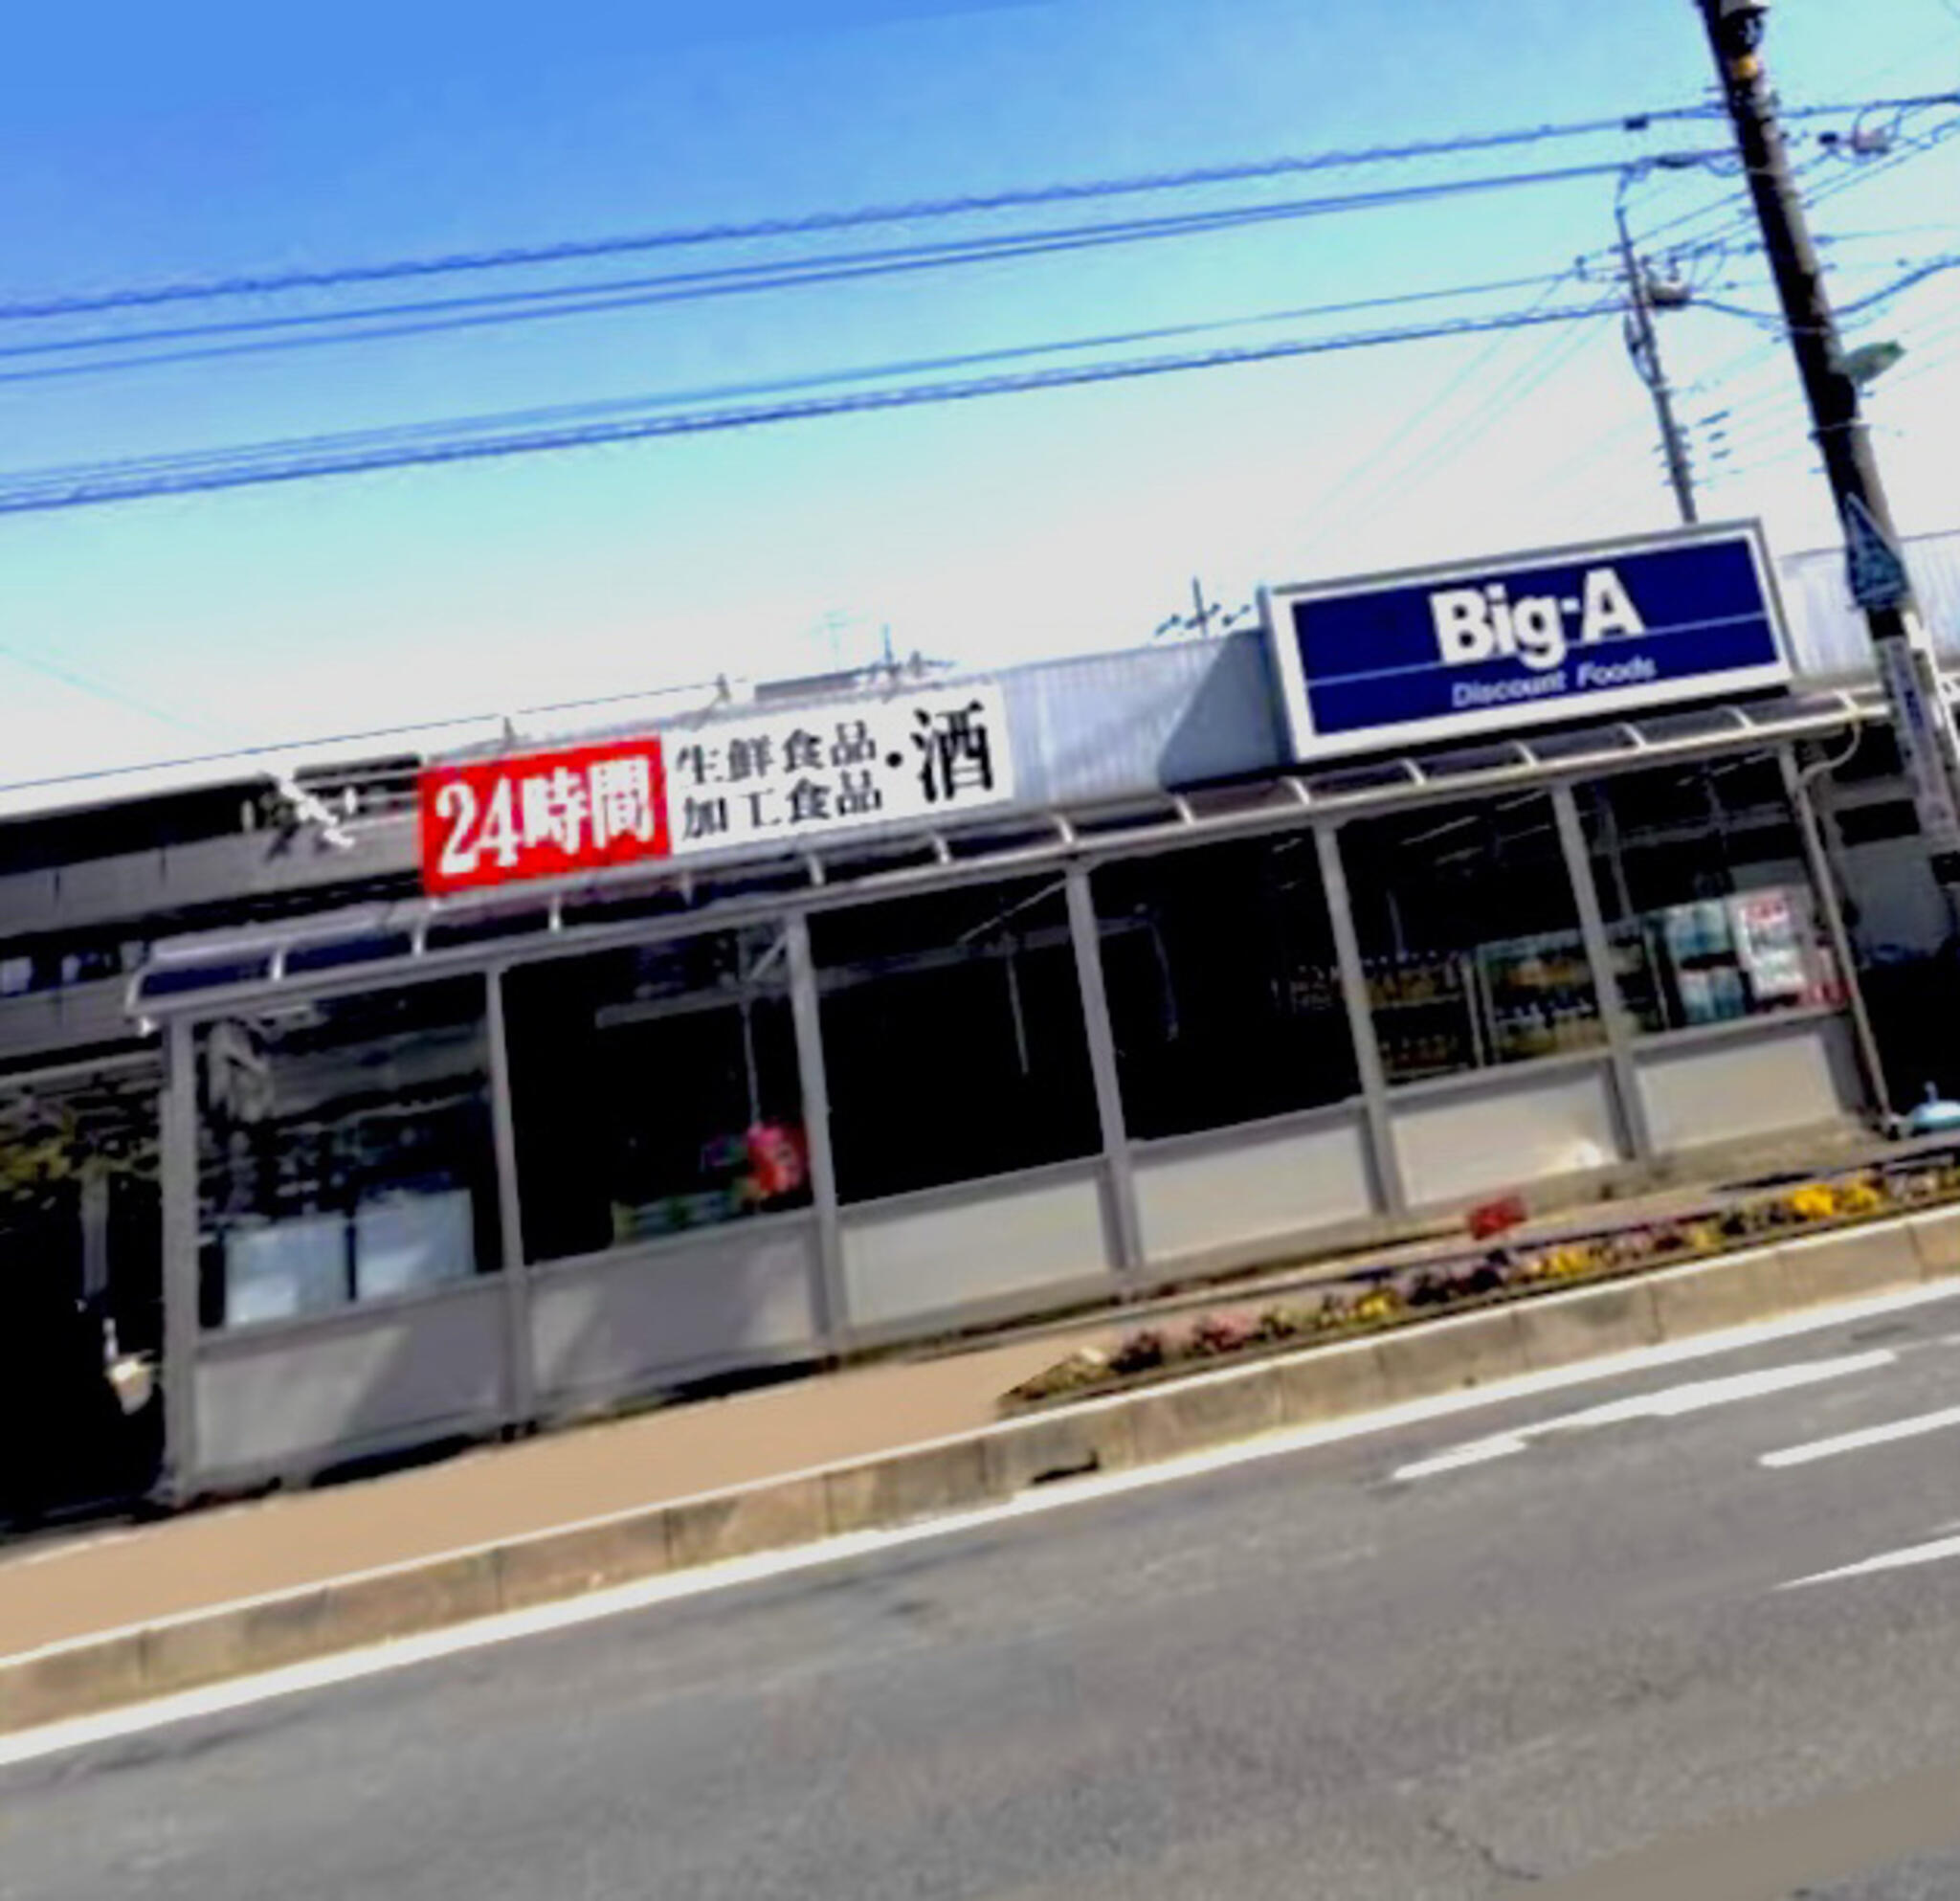 Big-A 三郷駅前店の代表写真8